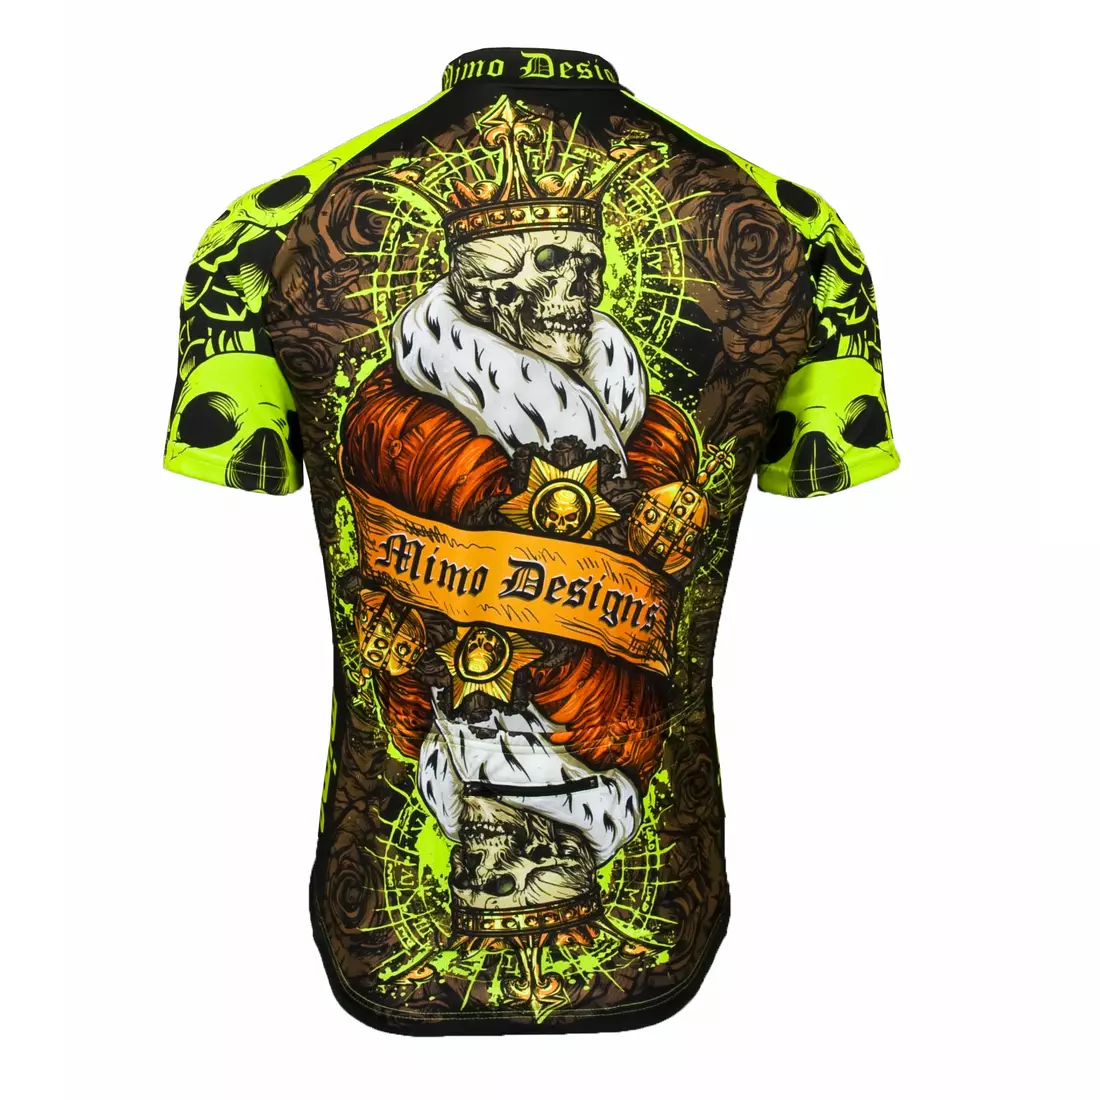 MikeSPORT DESIGN PREMIUM KING men's cycling jersey